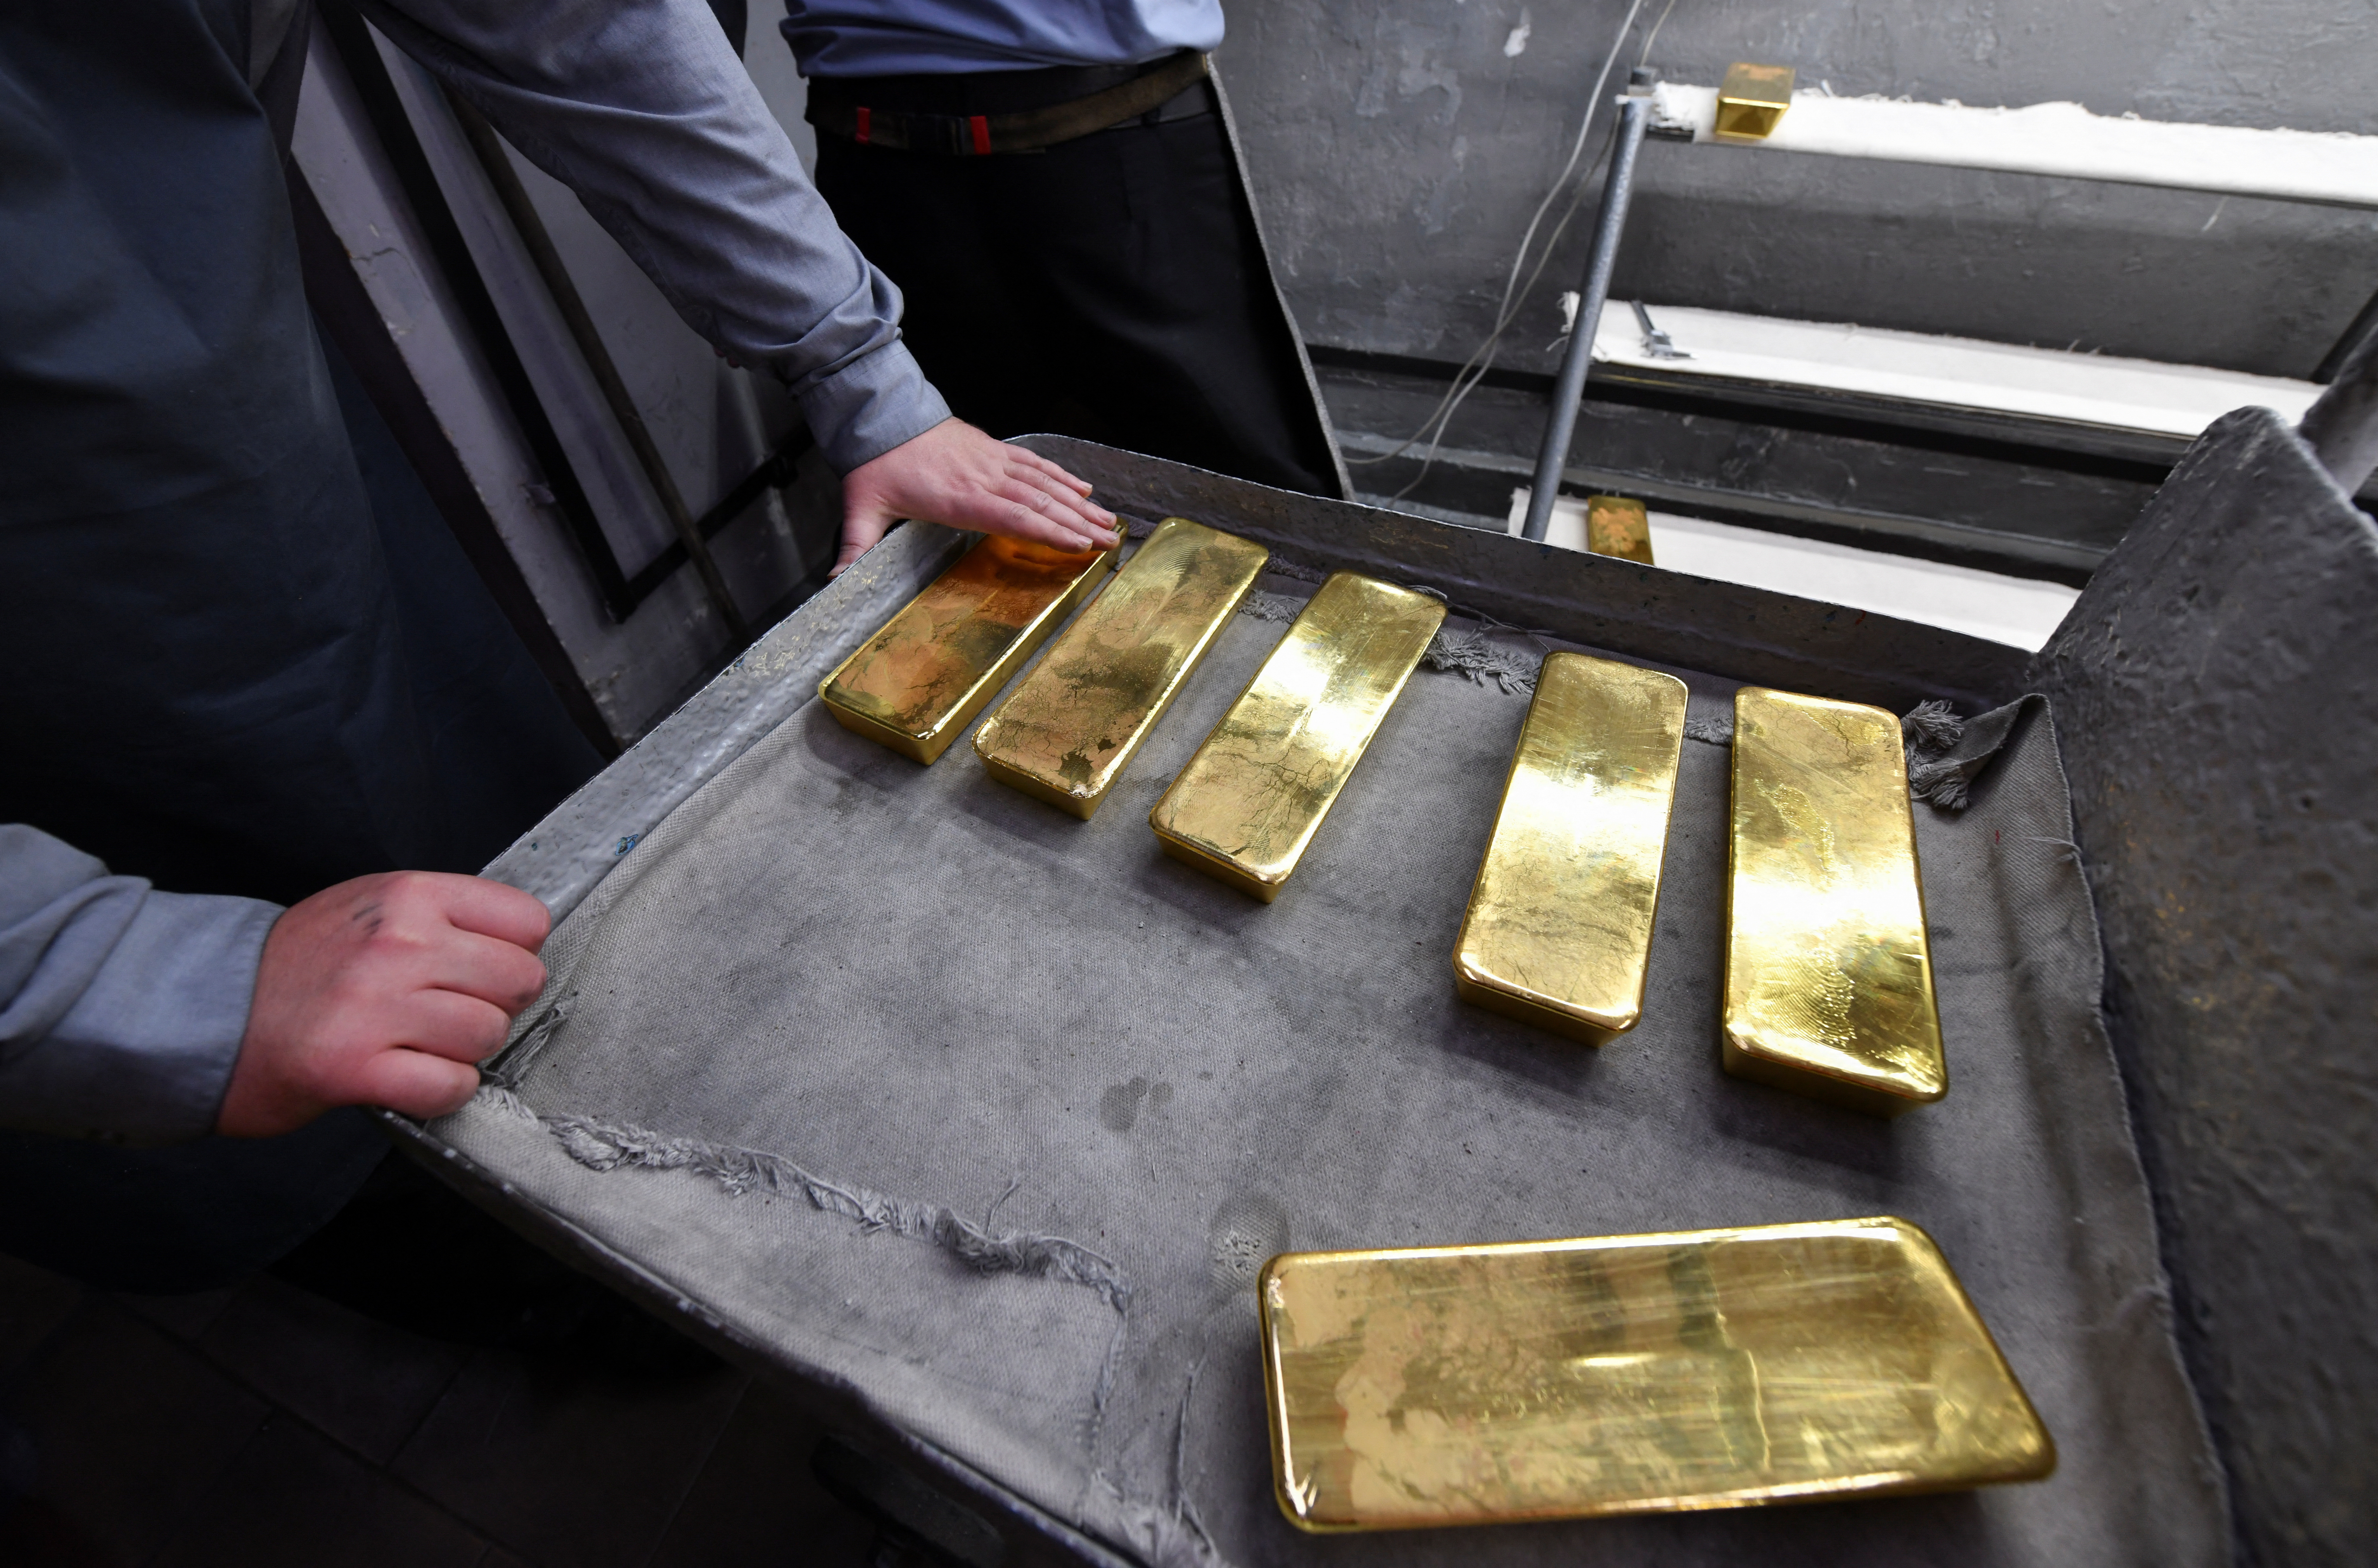 Production of gold at Krastsvetmet precious metals plant in Krasnoyarsk